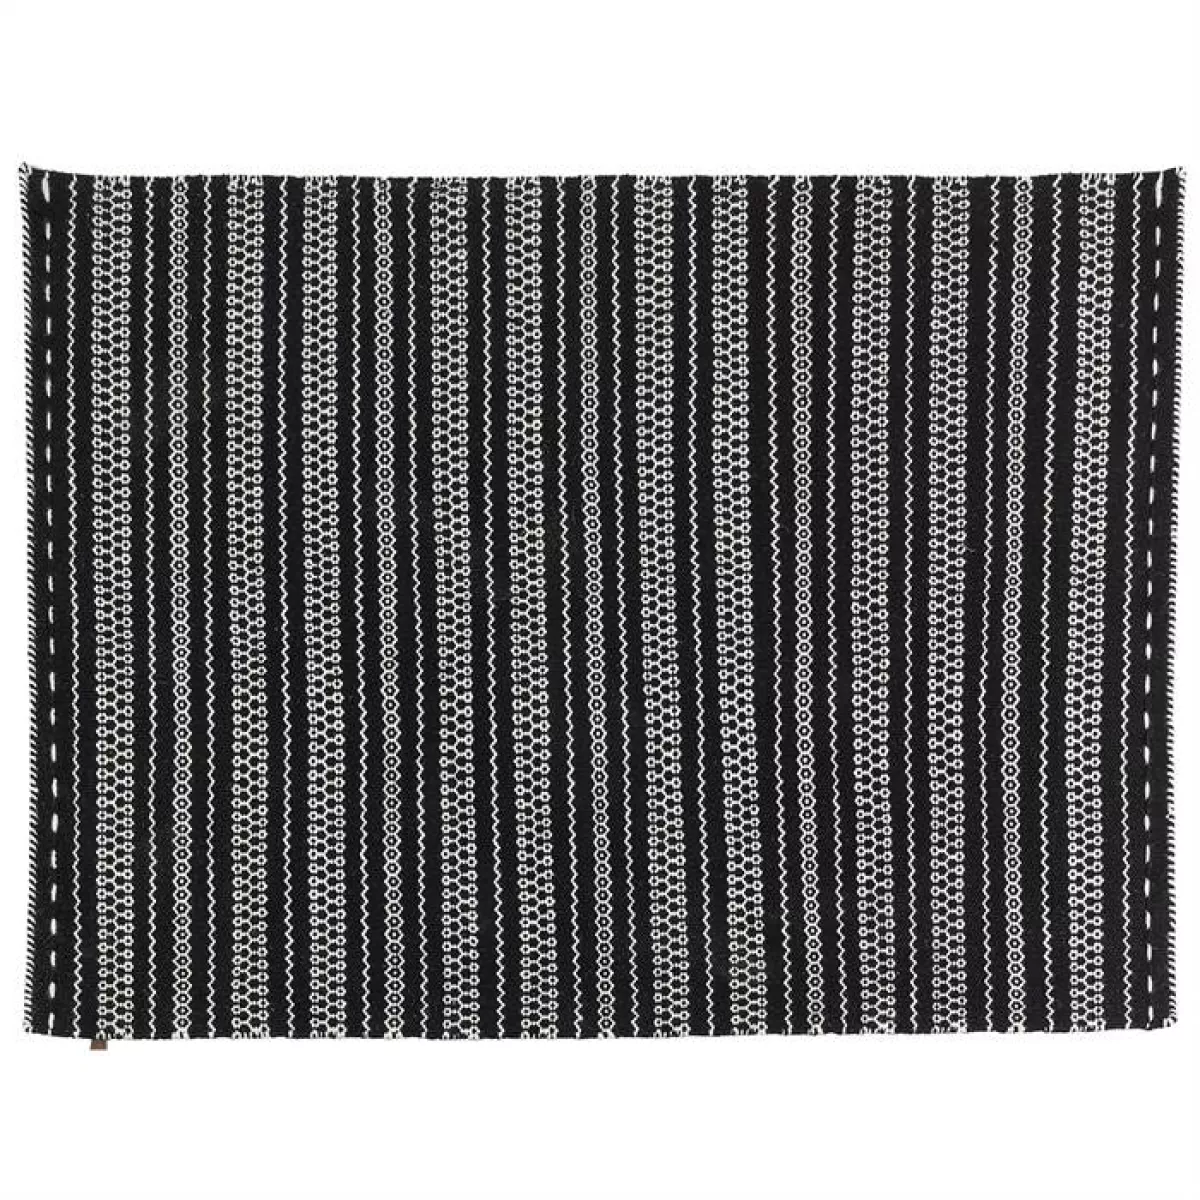 #3 - Kilroy Indbo Braga tæppe Kelim tæppe - Black & White - 160 x 230 cm